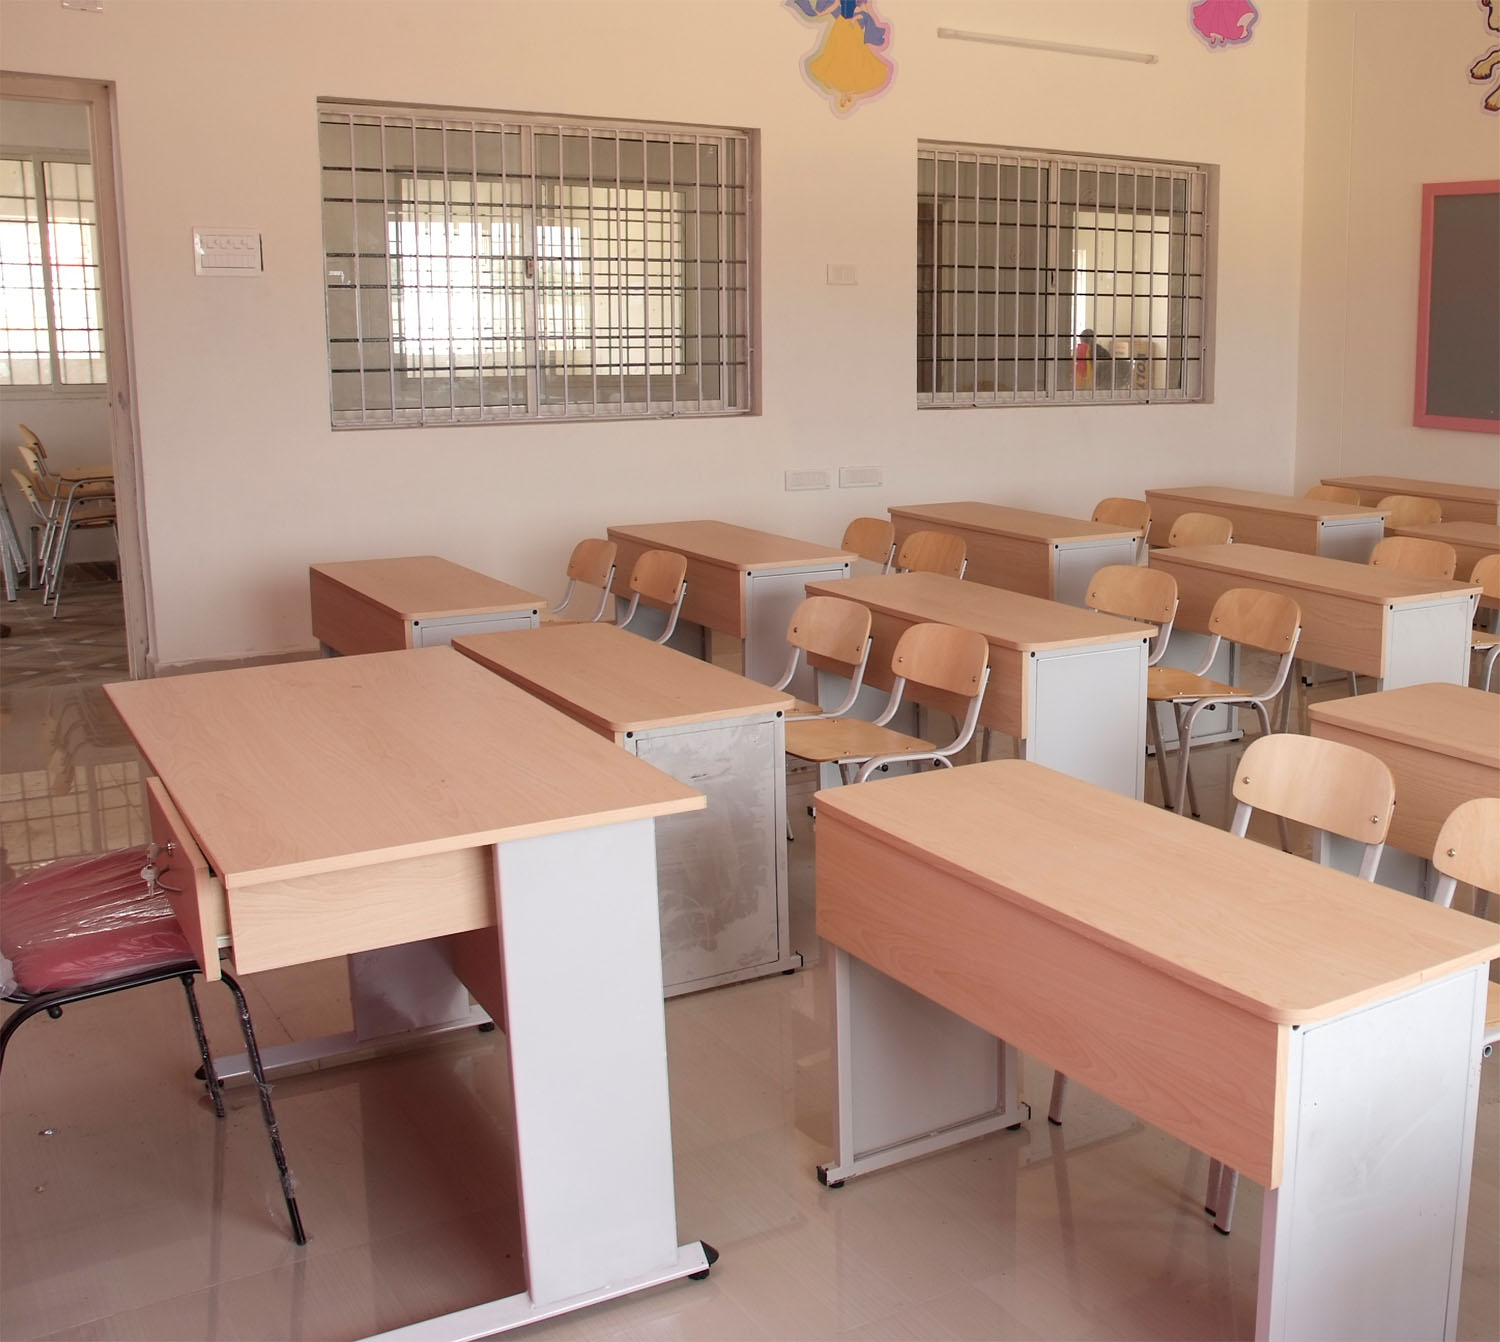 Furniture School Tables